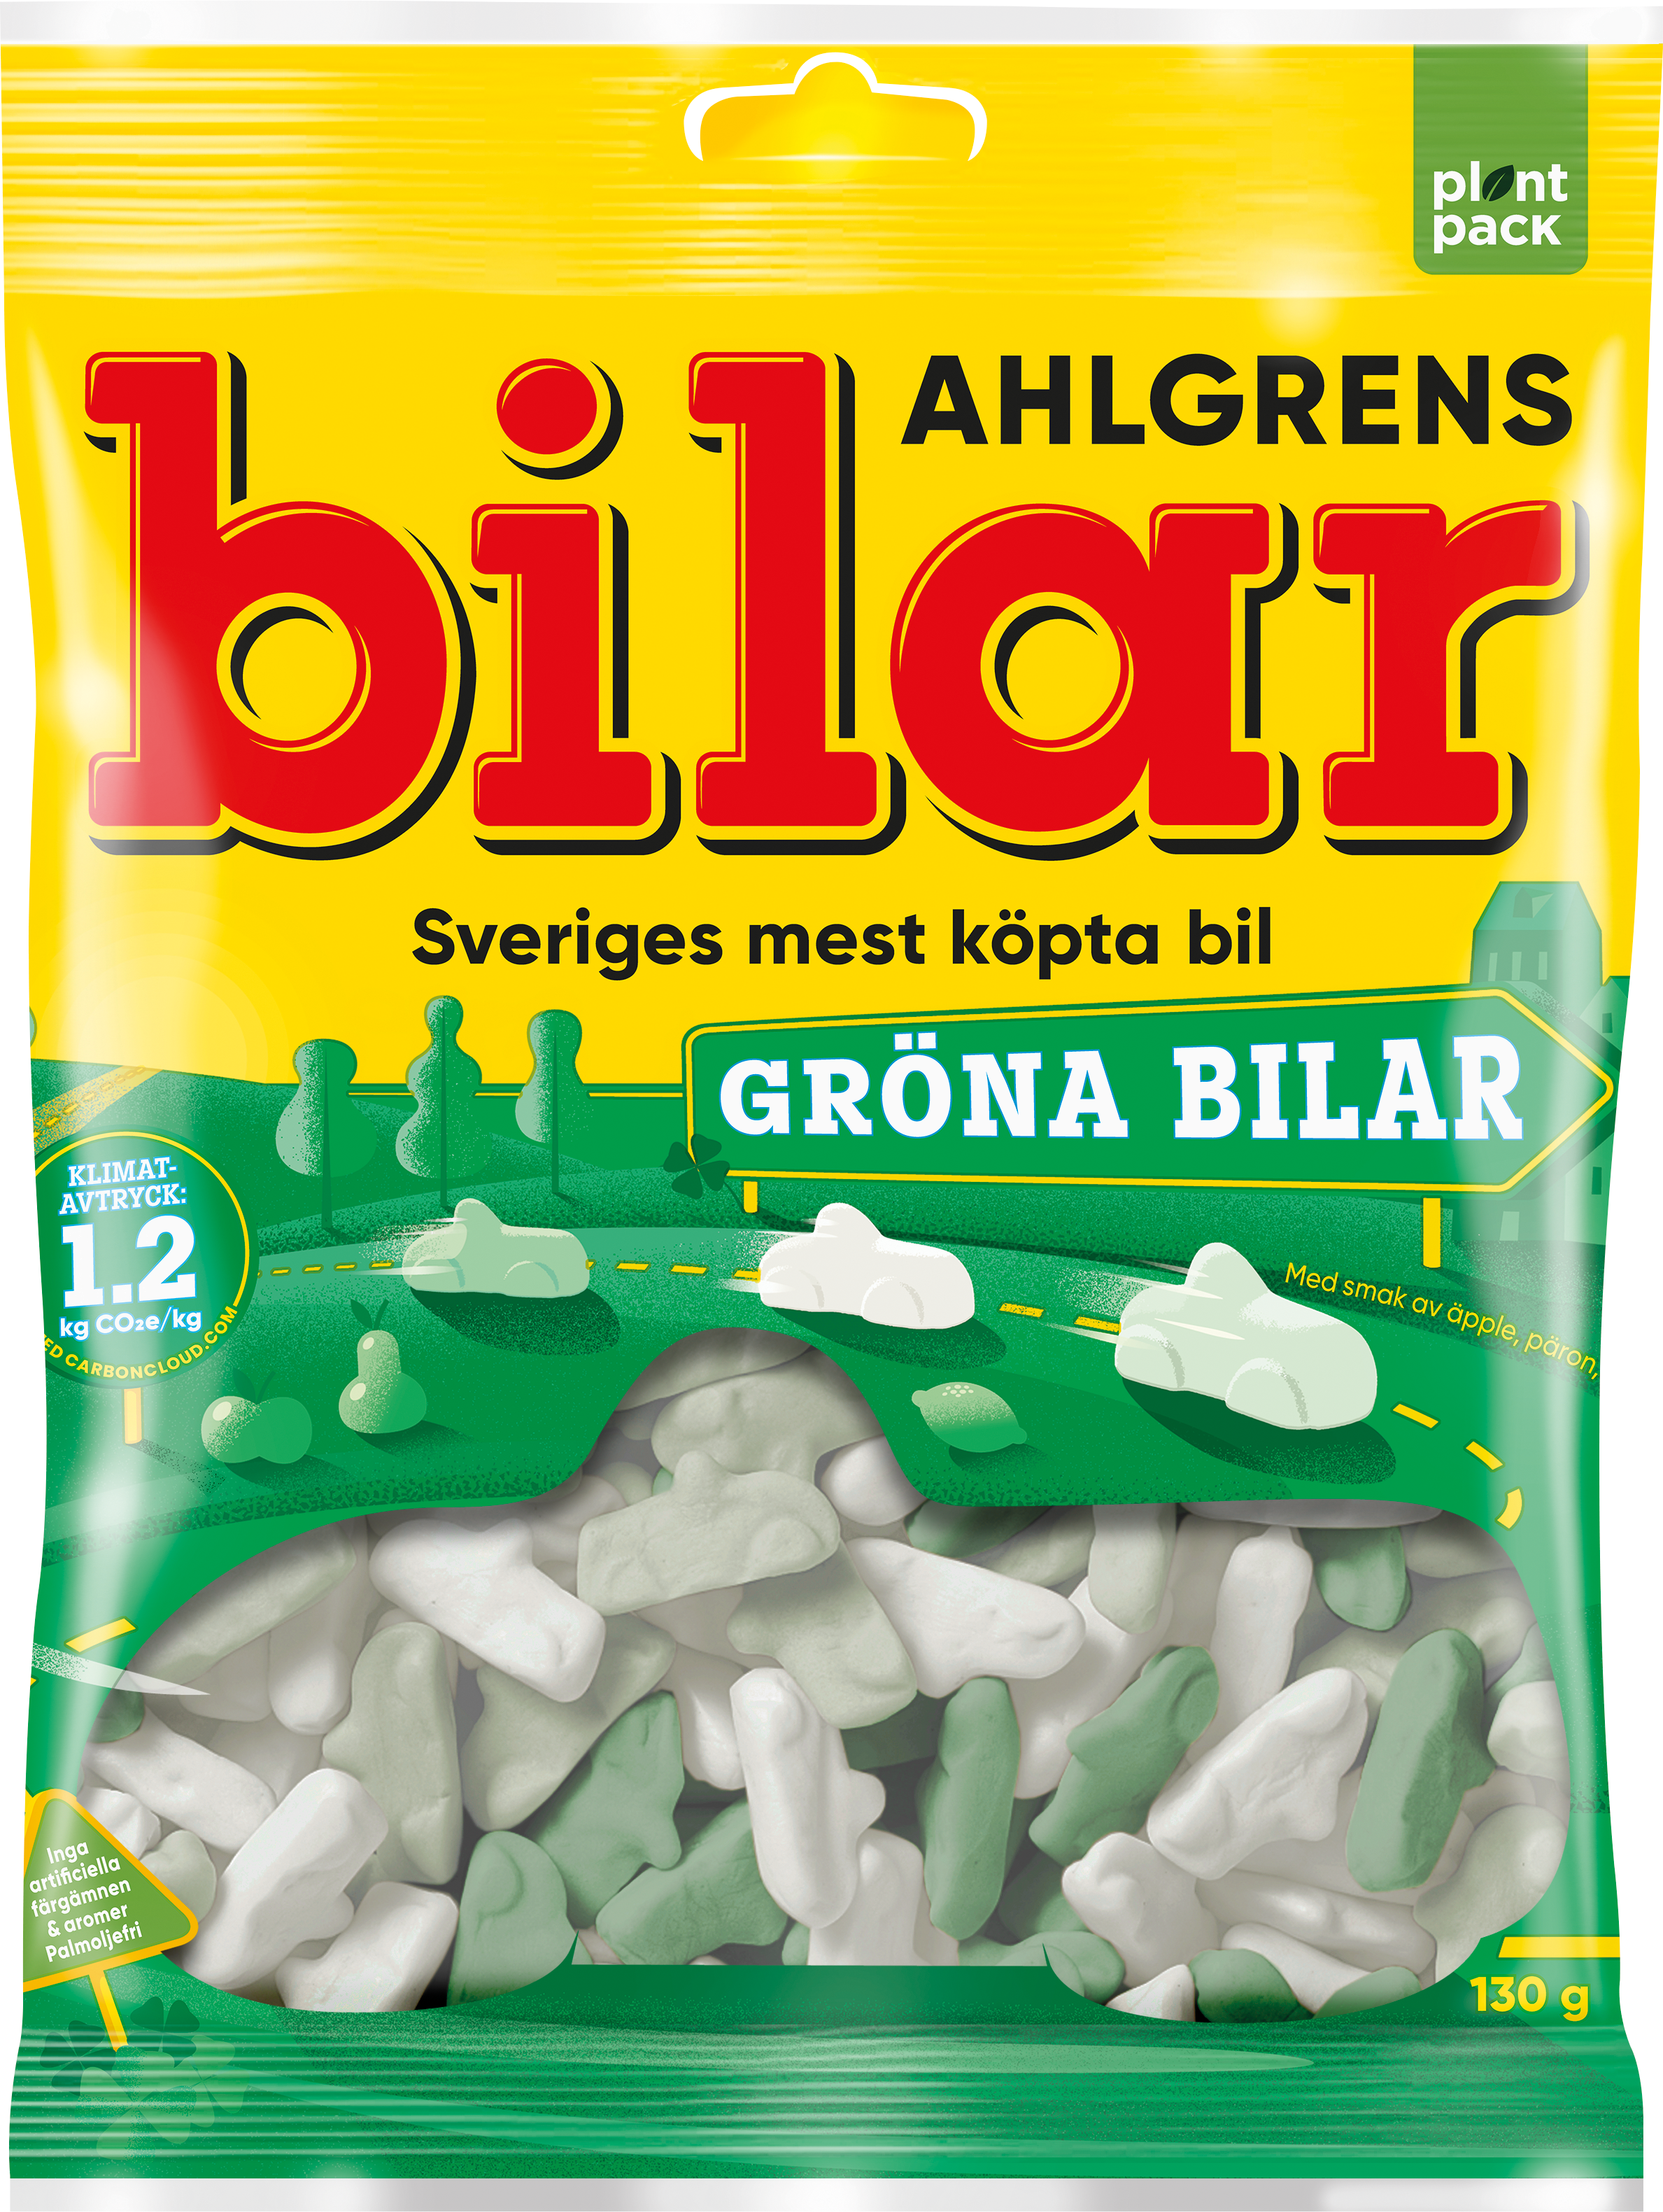 Ahlgrens Bilar Green Cars by Sweet Side of Sweden